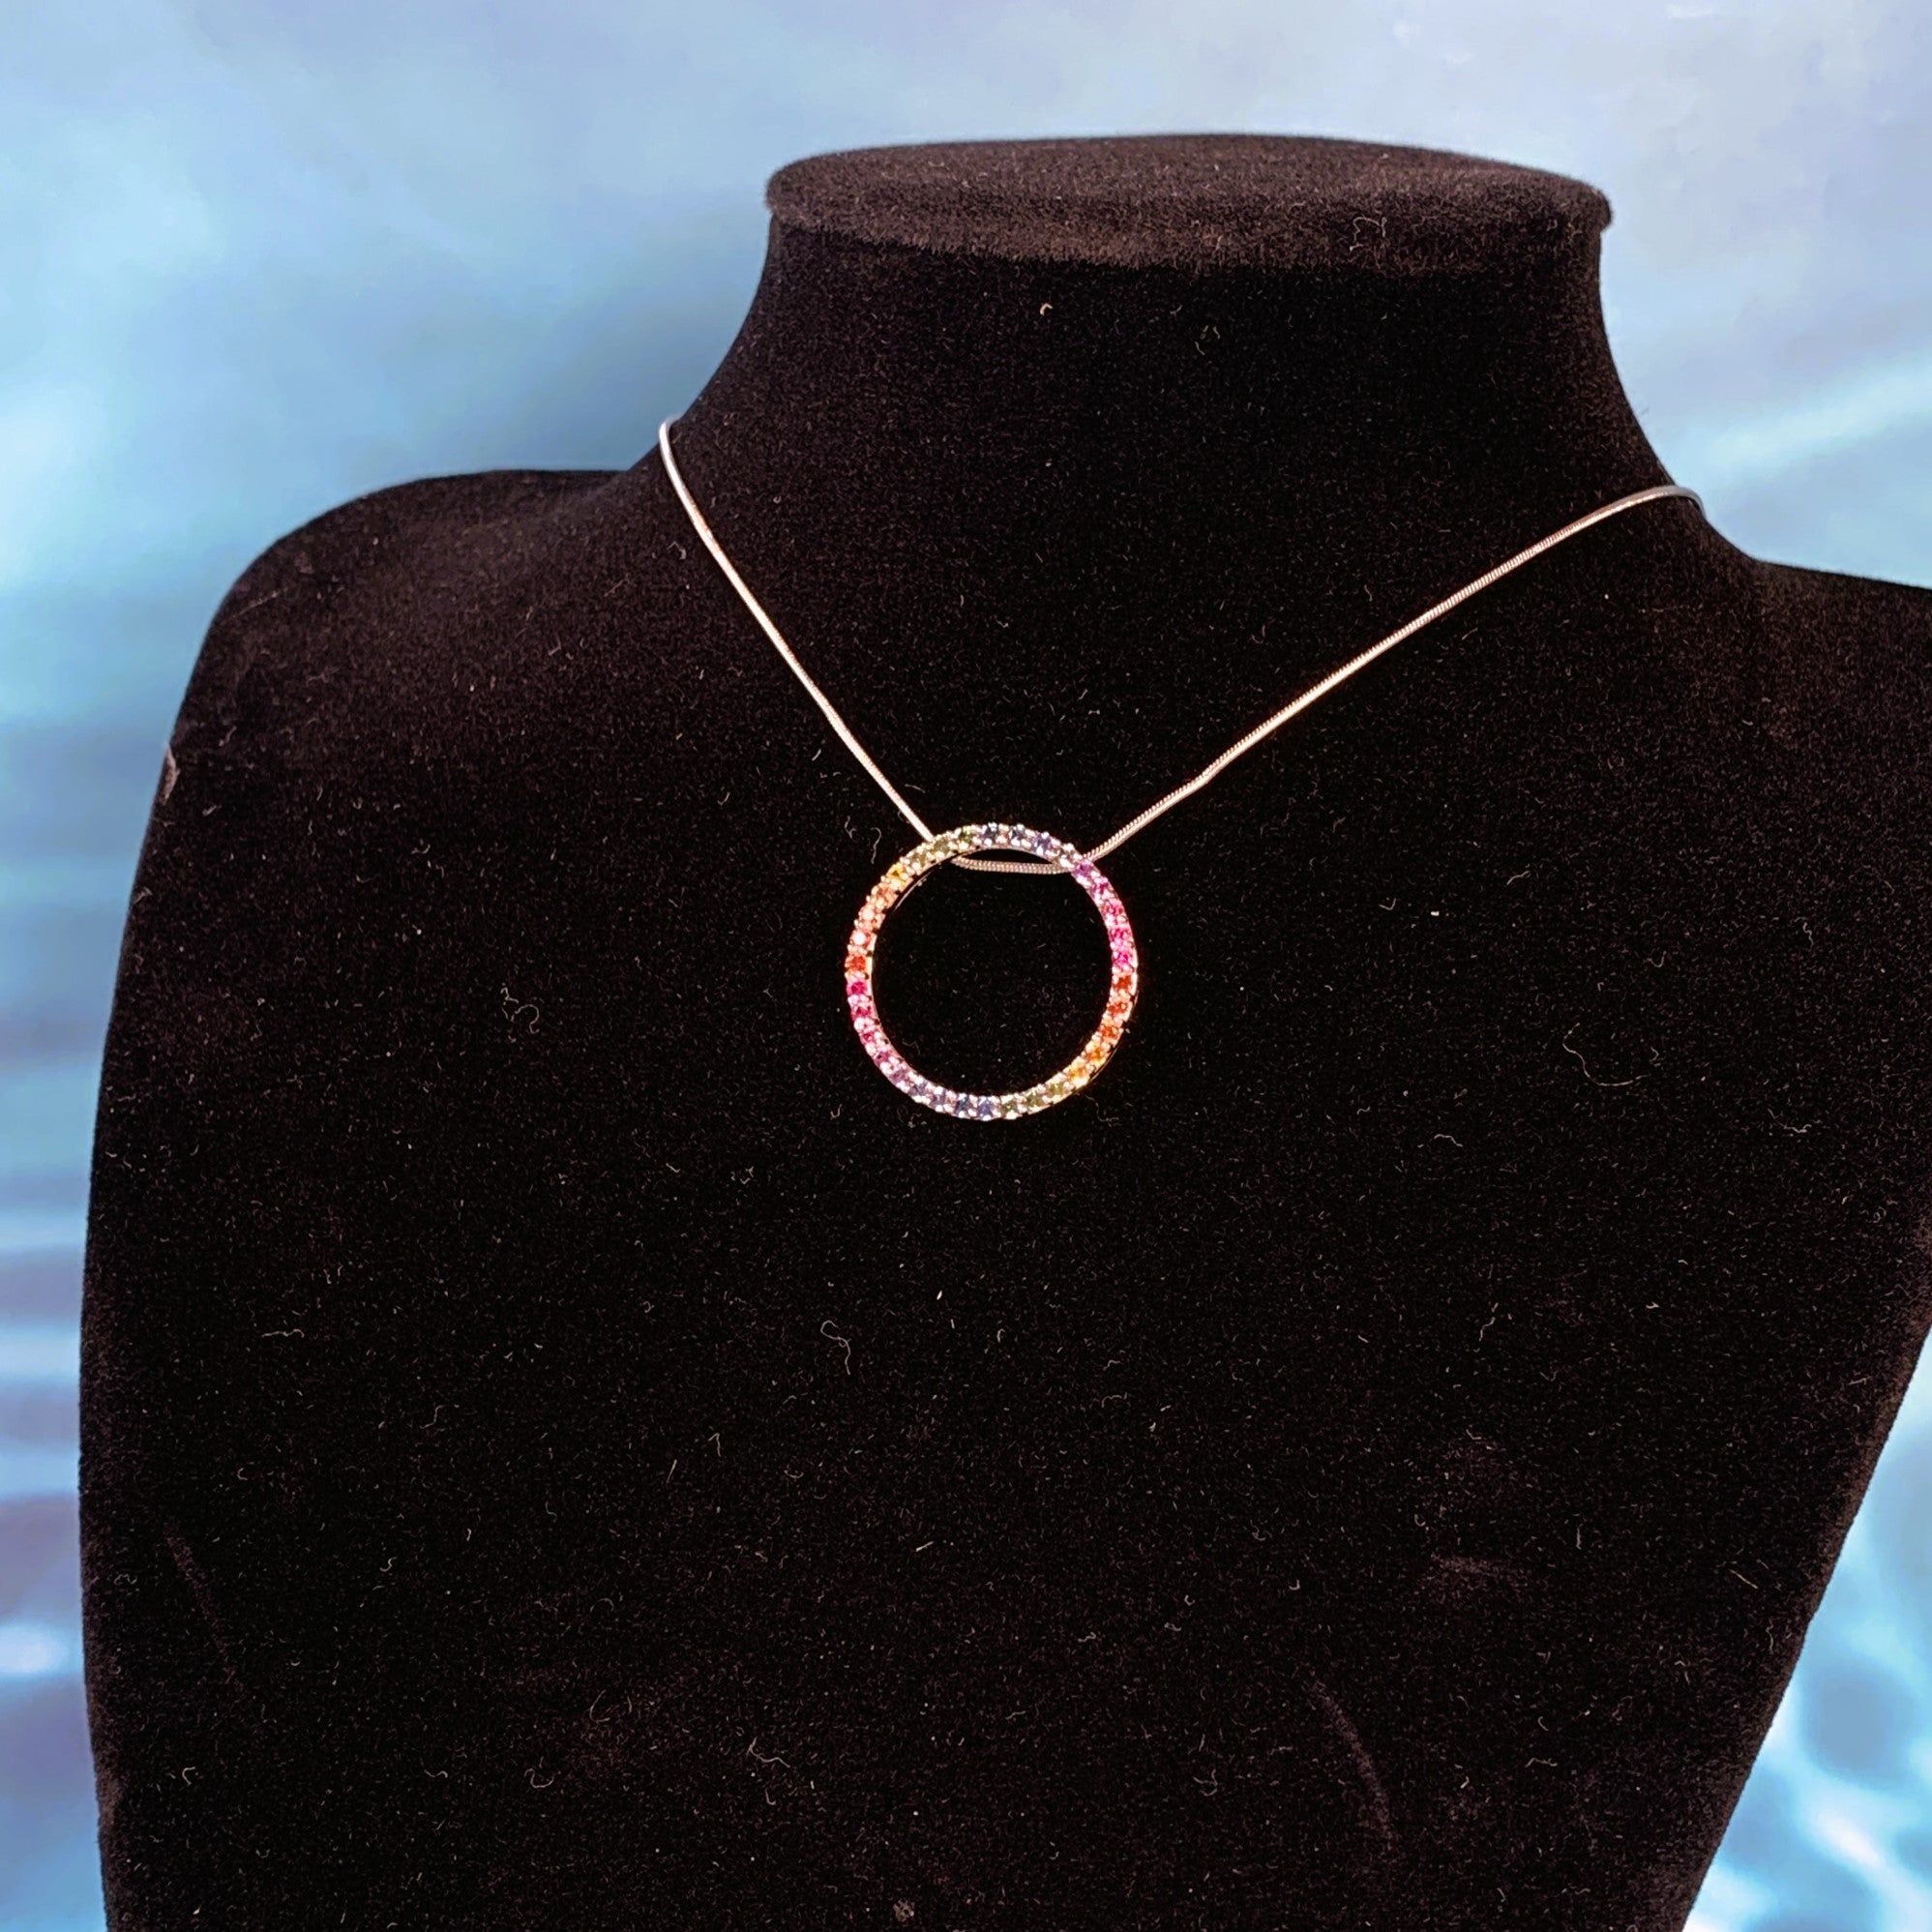 9kt White Gold Multi Colour Sapphire Circle necklace - Masterpiece Jewellery Opal & Gems Sydney Australia | Online Shop